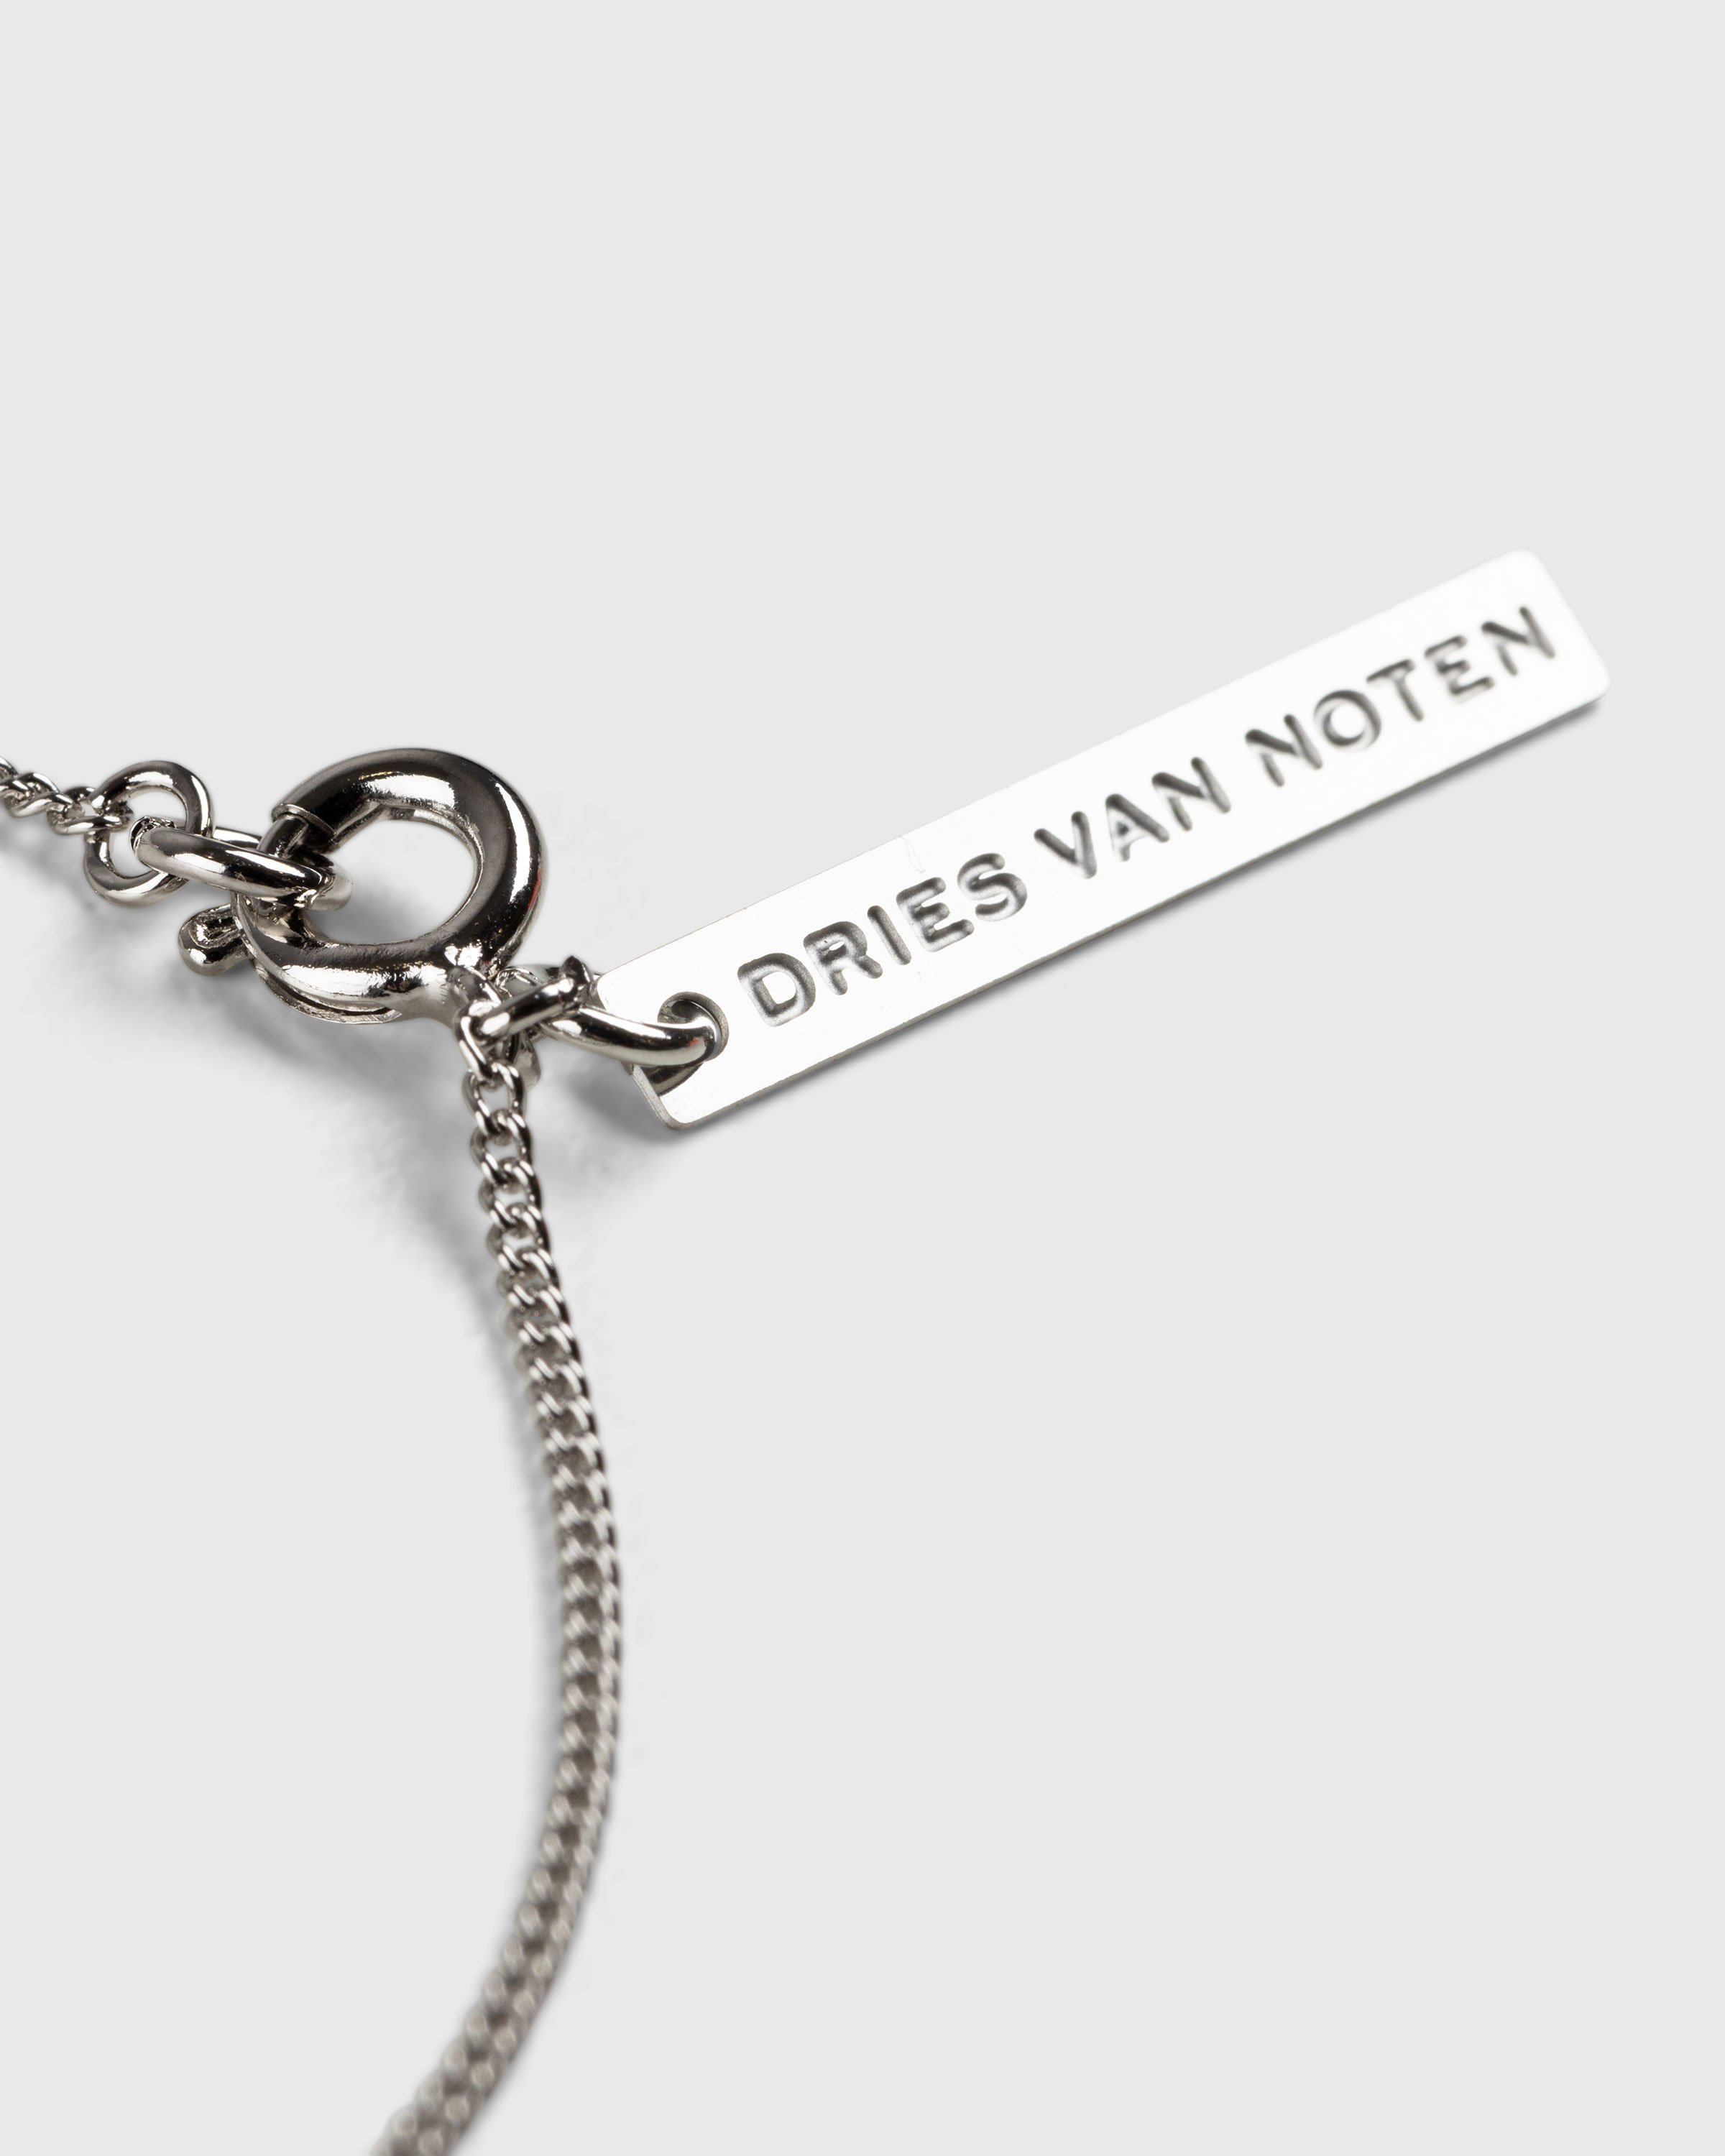 Dries van Noten - Logo Tag Bracelet Silver - Accessories - Silver - Image 2